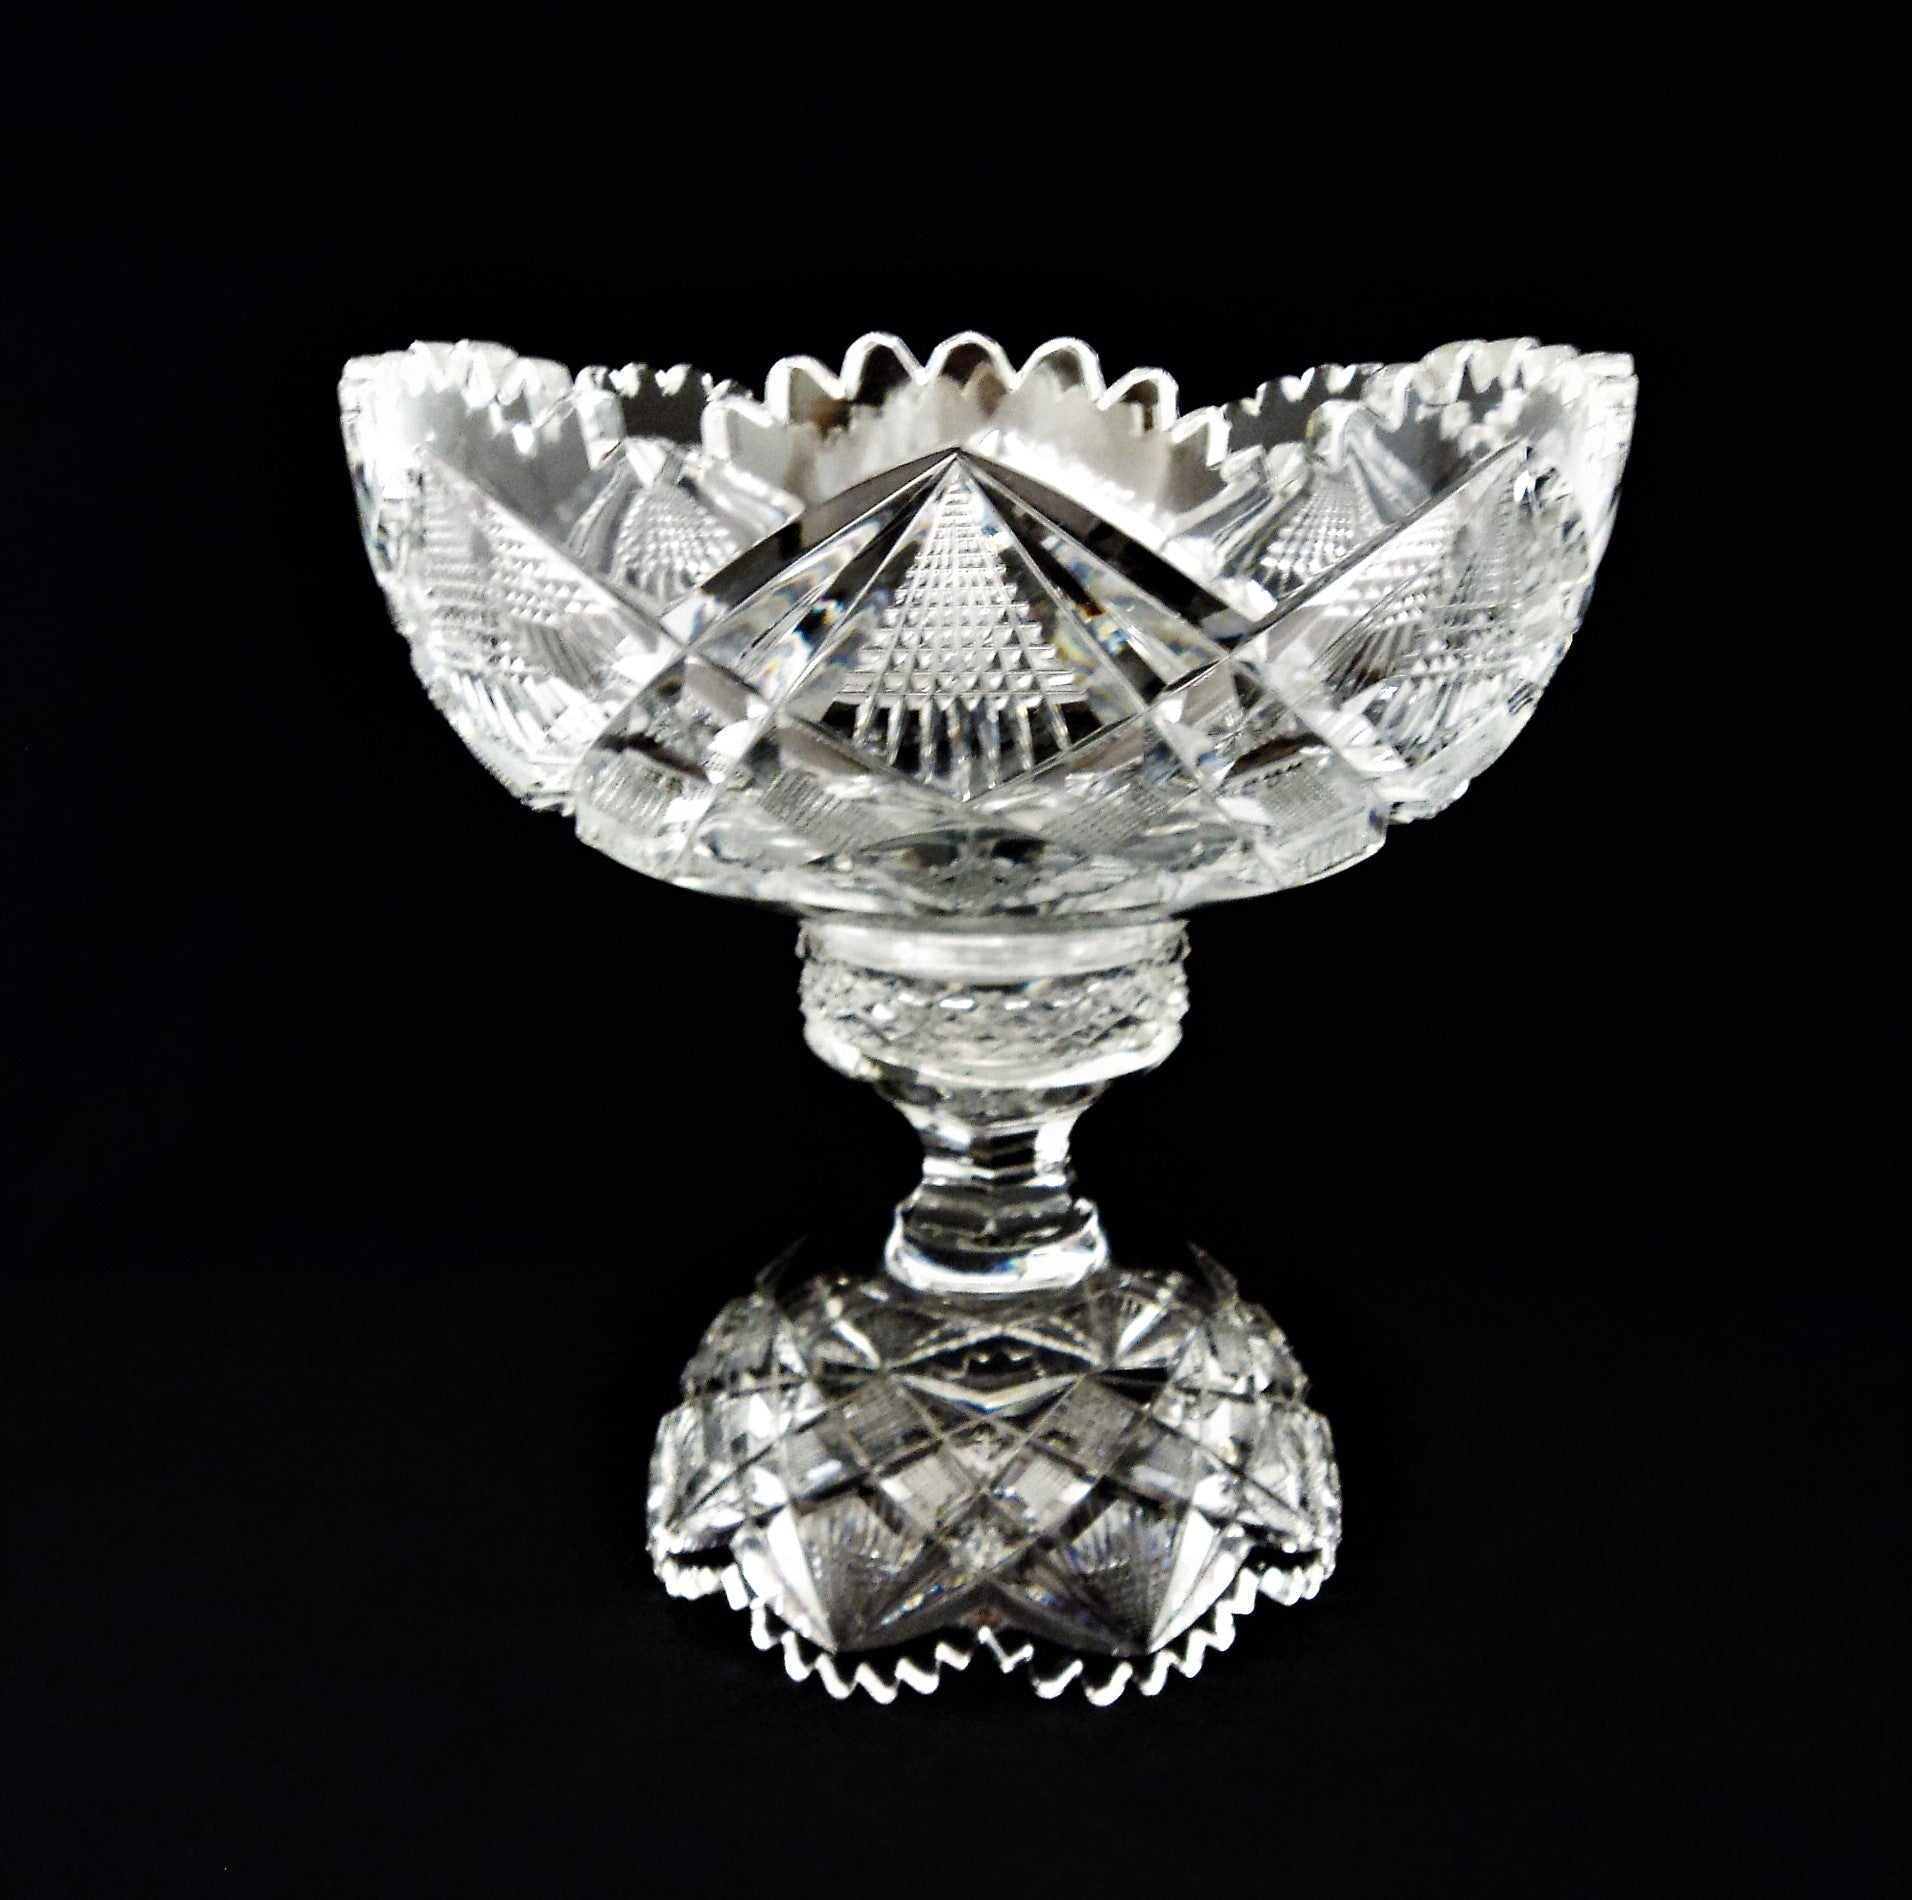 Vintage European Cut Crystal Fruit Bowl with Pedestal